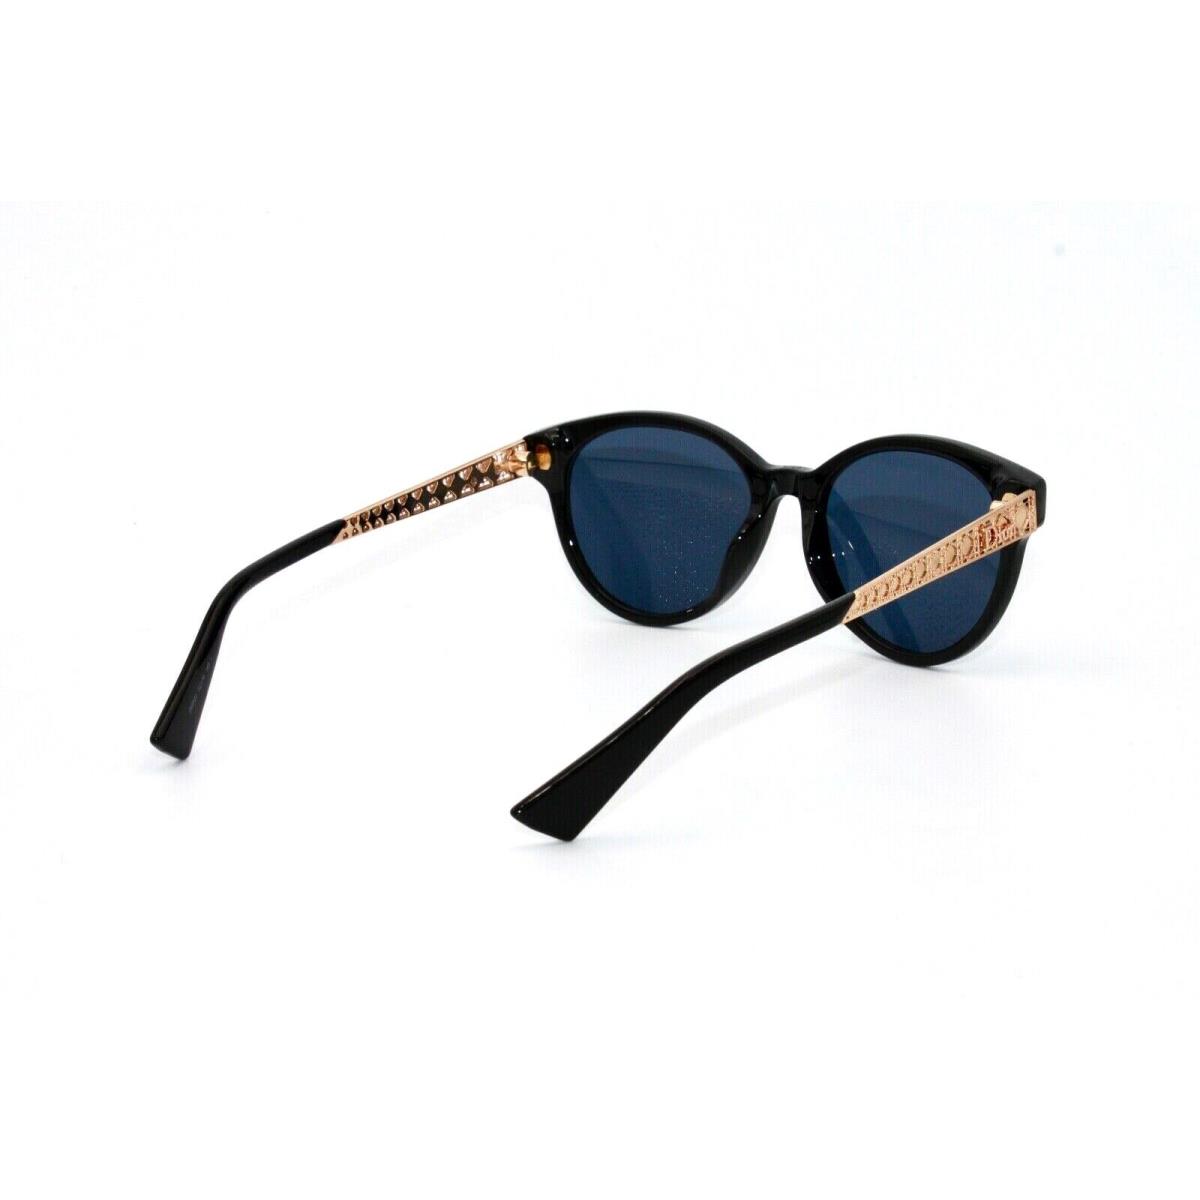 Christian Dior Sunglasses Diorama7 26SKU 52-18 145 WF107BQBBF Made in Italy